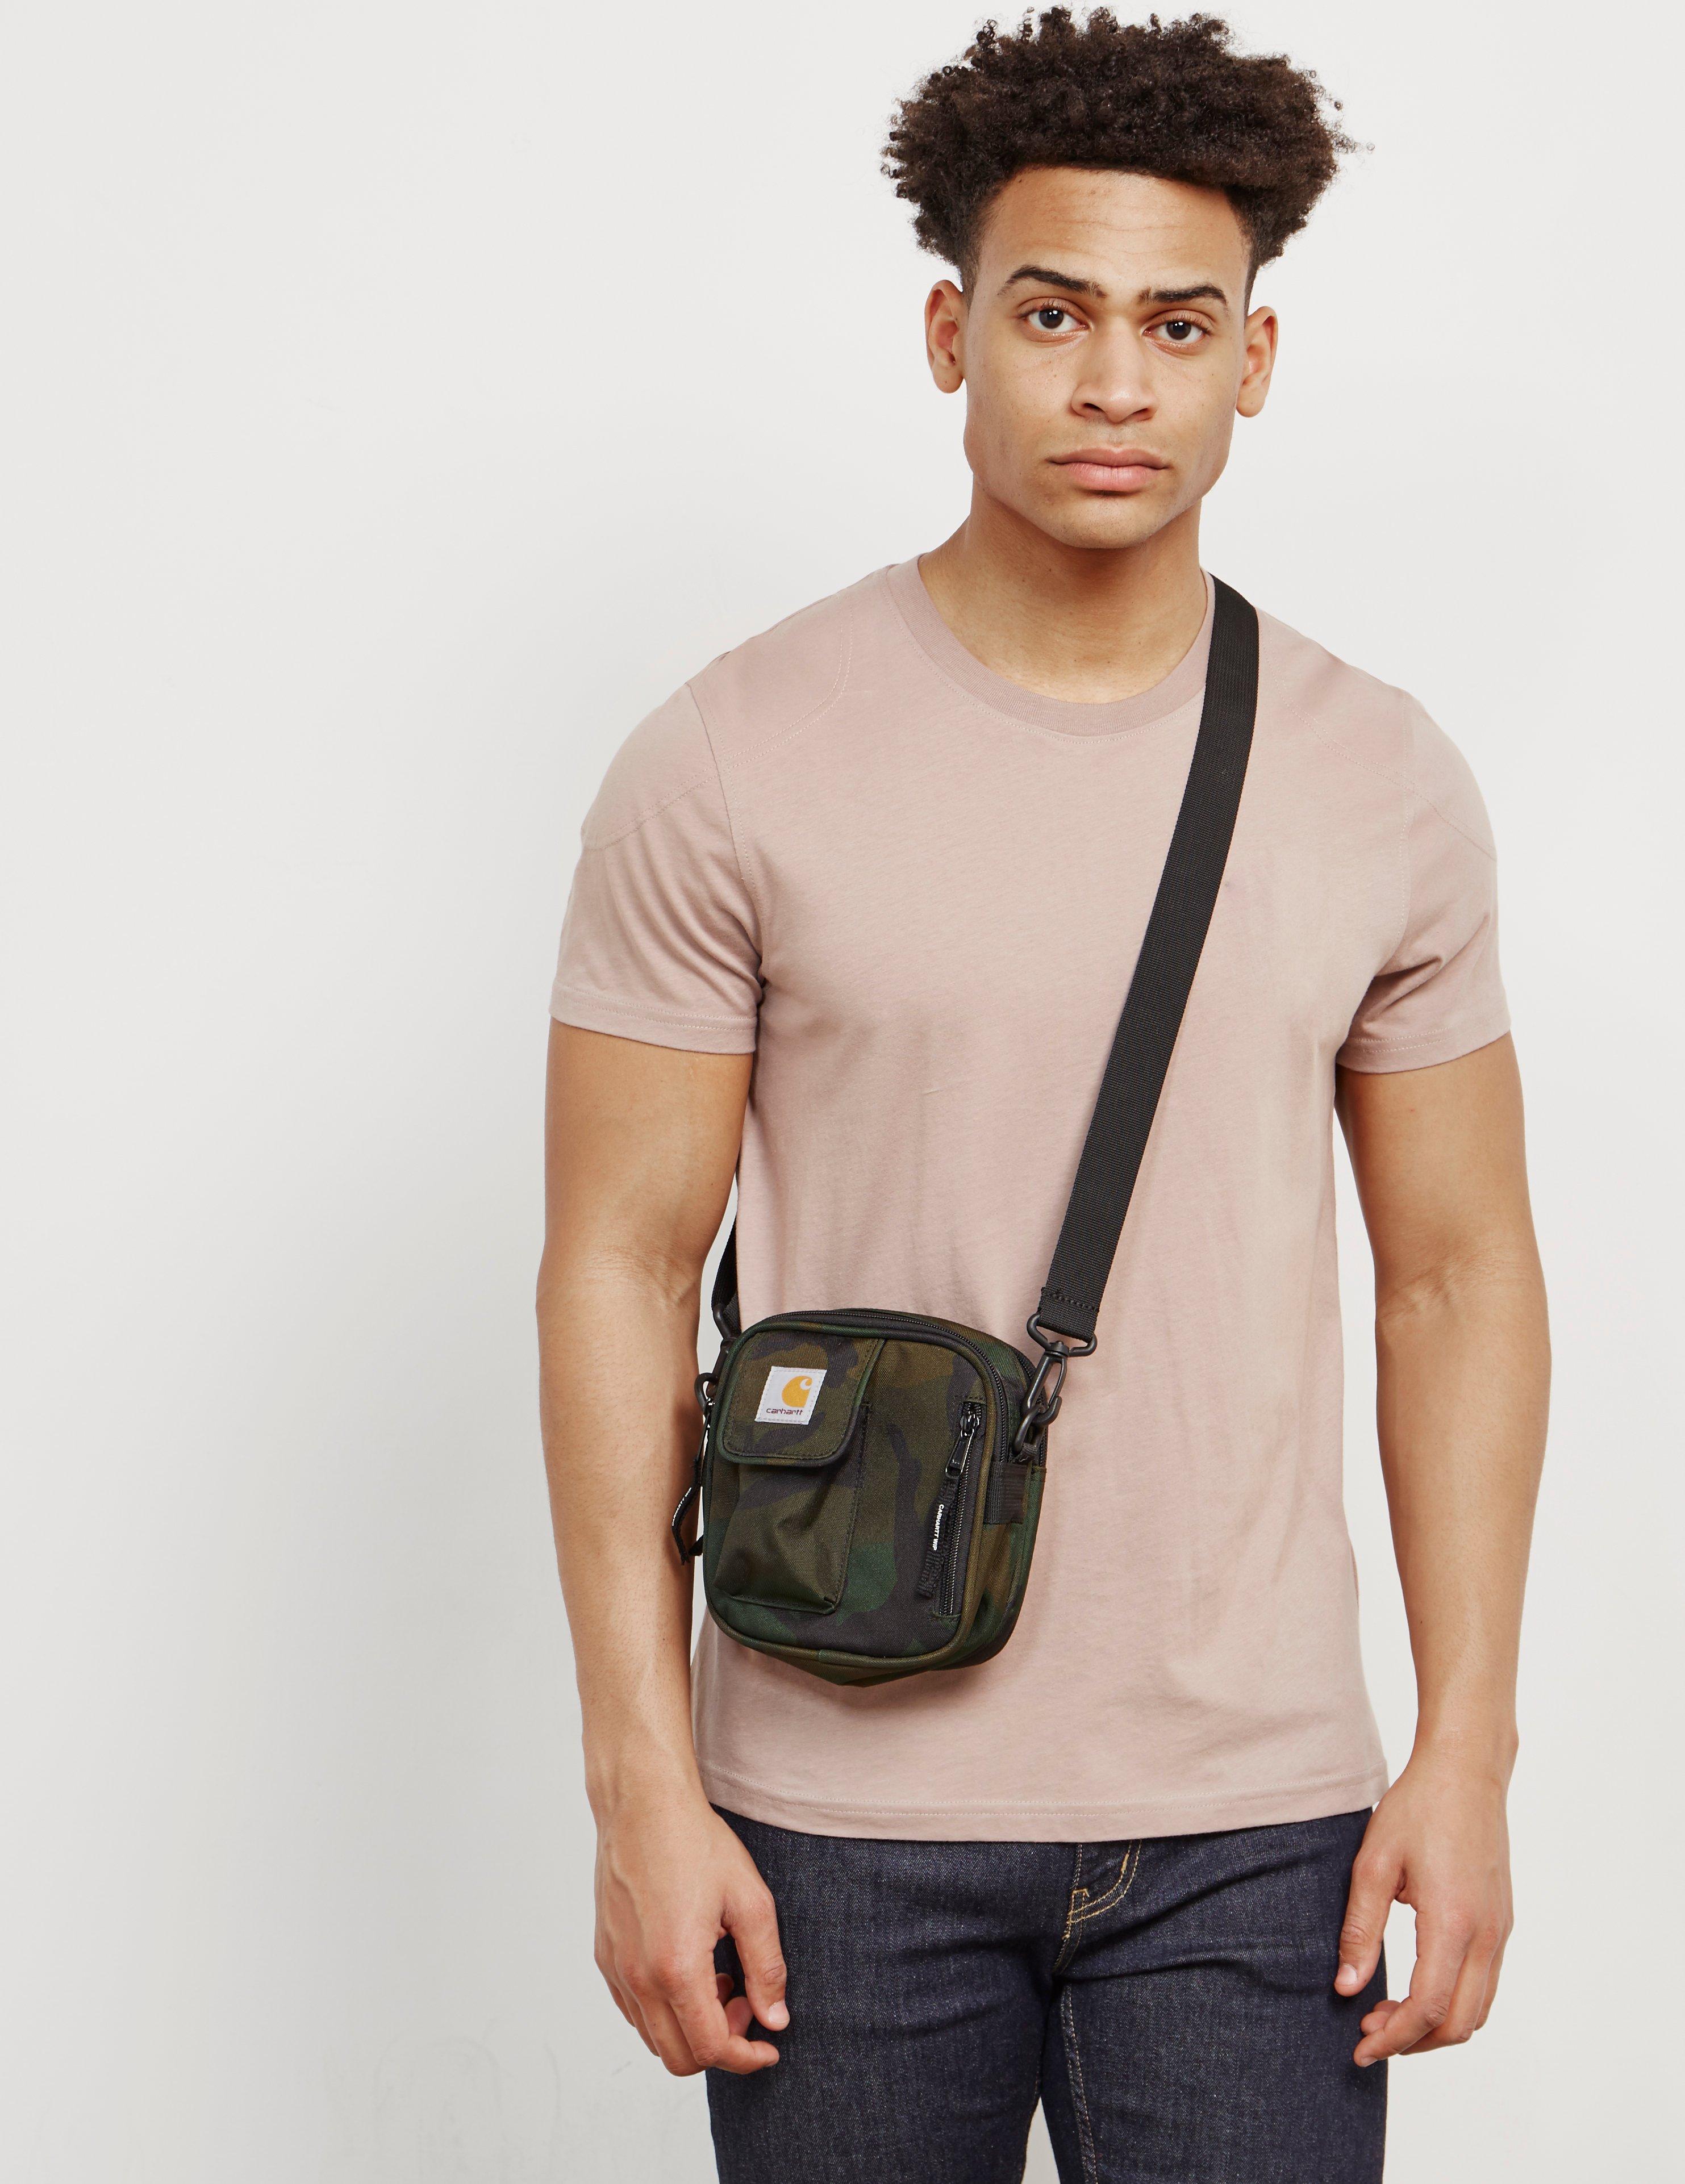 Carhartt WIP Mens Essential Side Bag Green for Men - Lyst